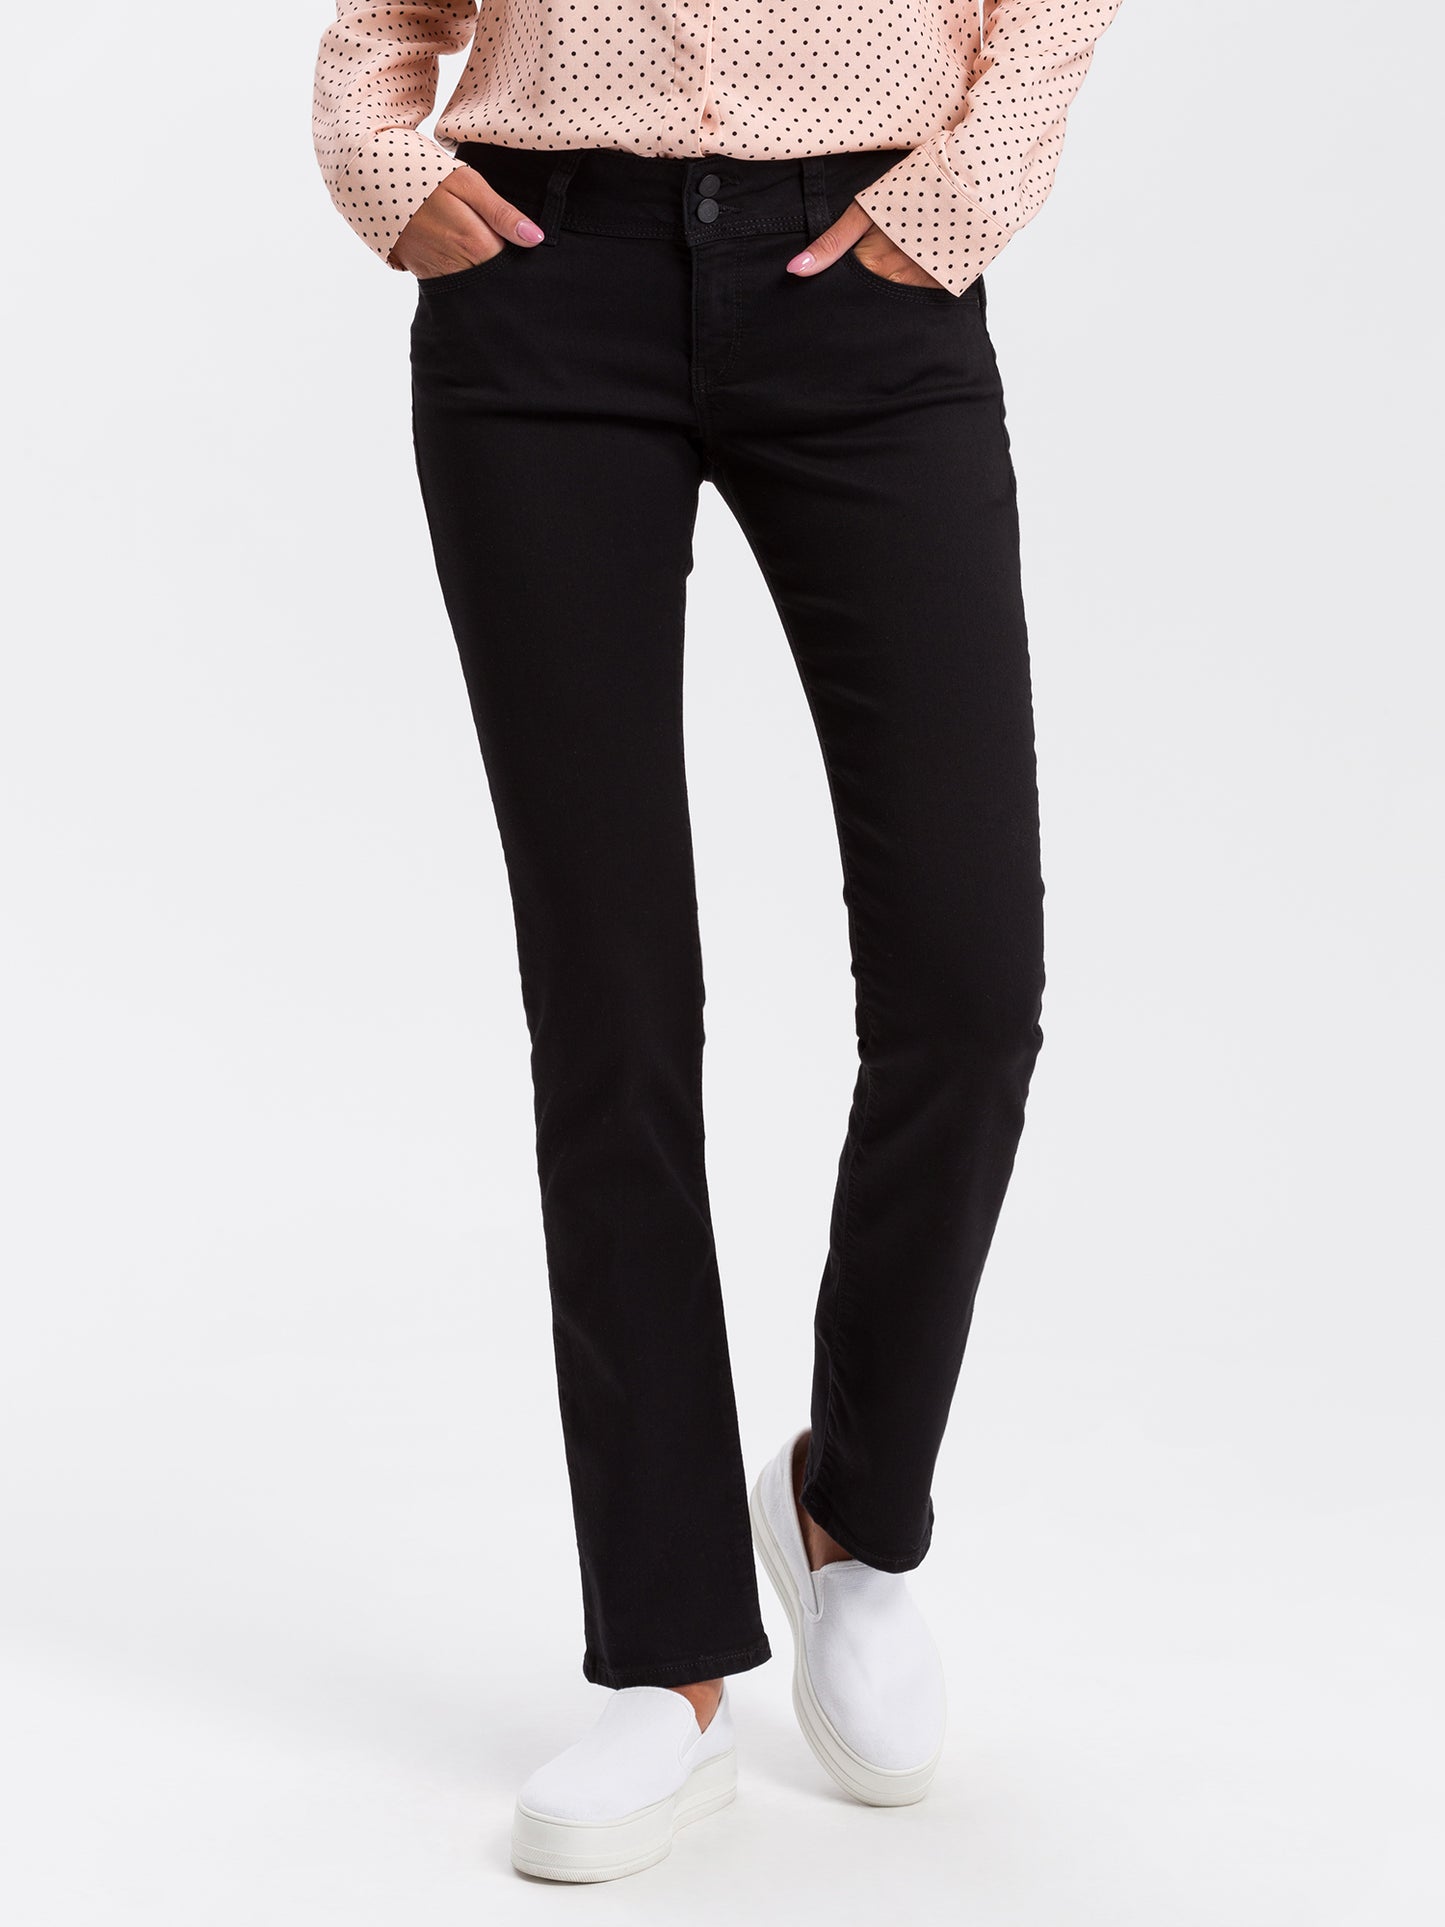 Loie women's jeans regular fit mid waist straight leg black